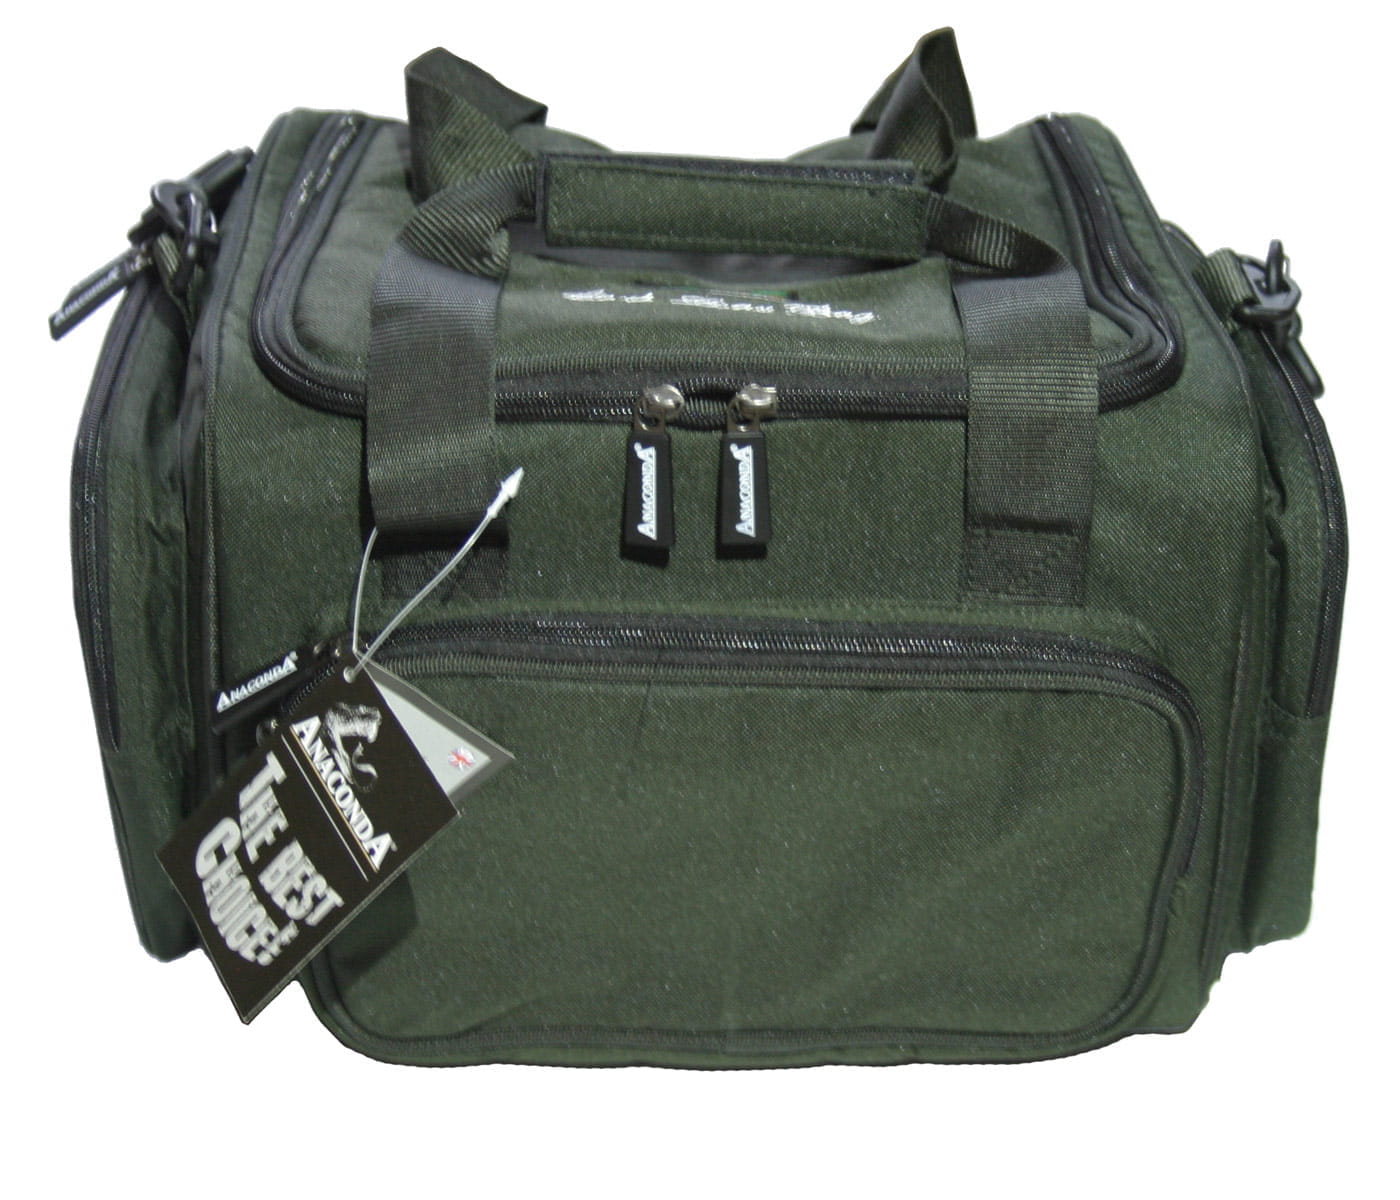 Anaconda Carp Gear Bag I